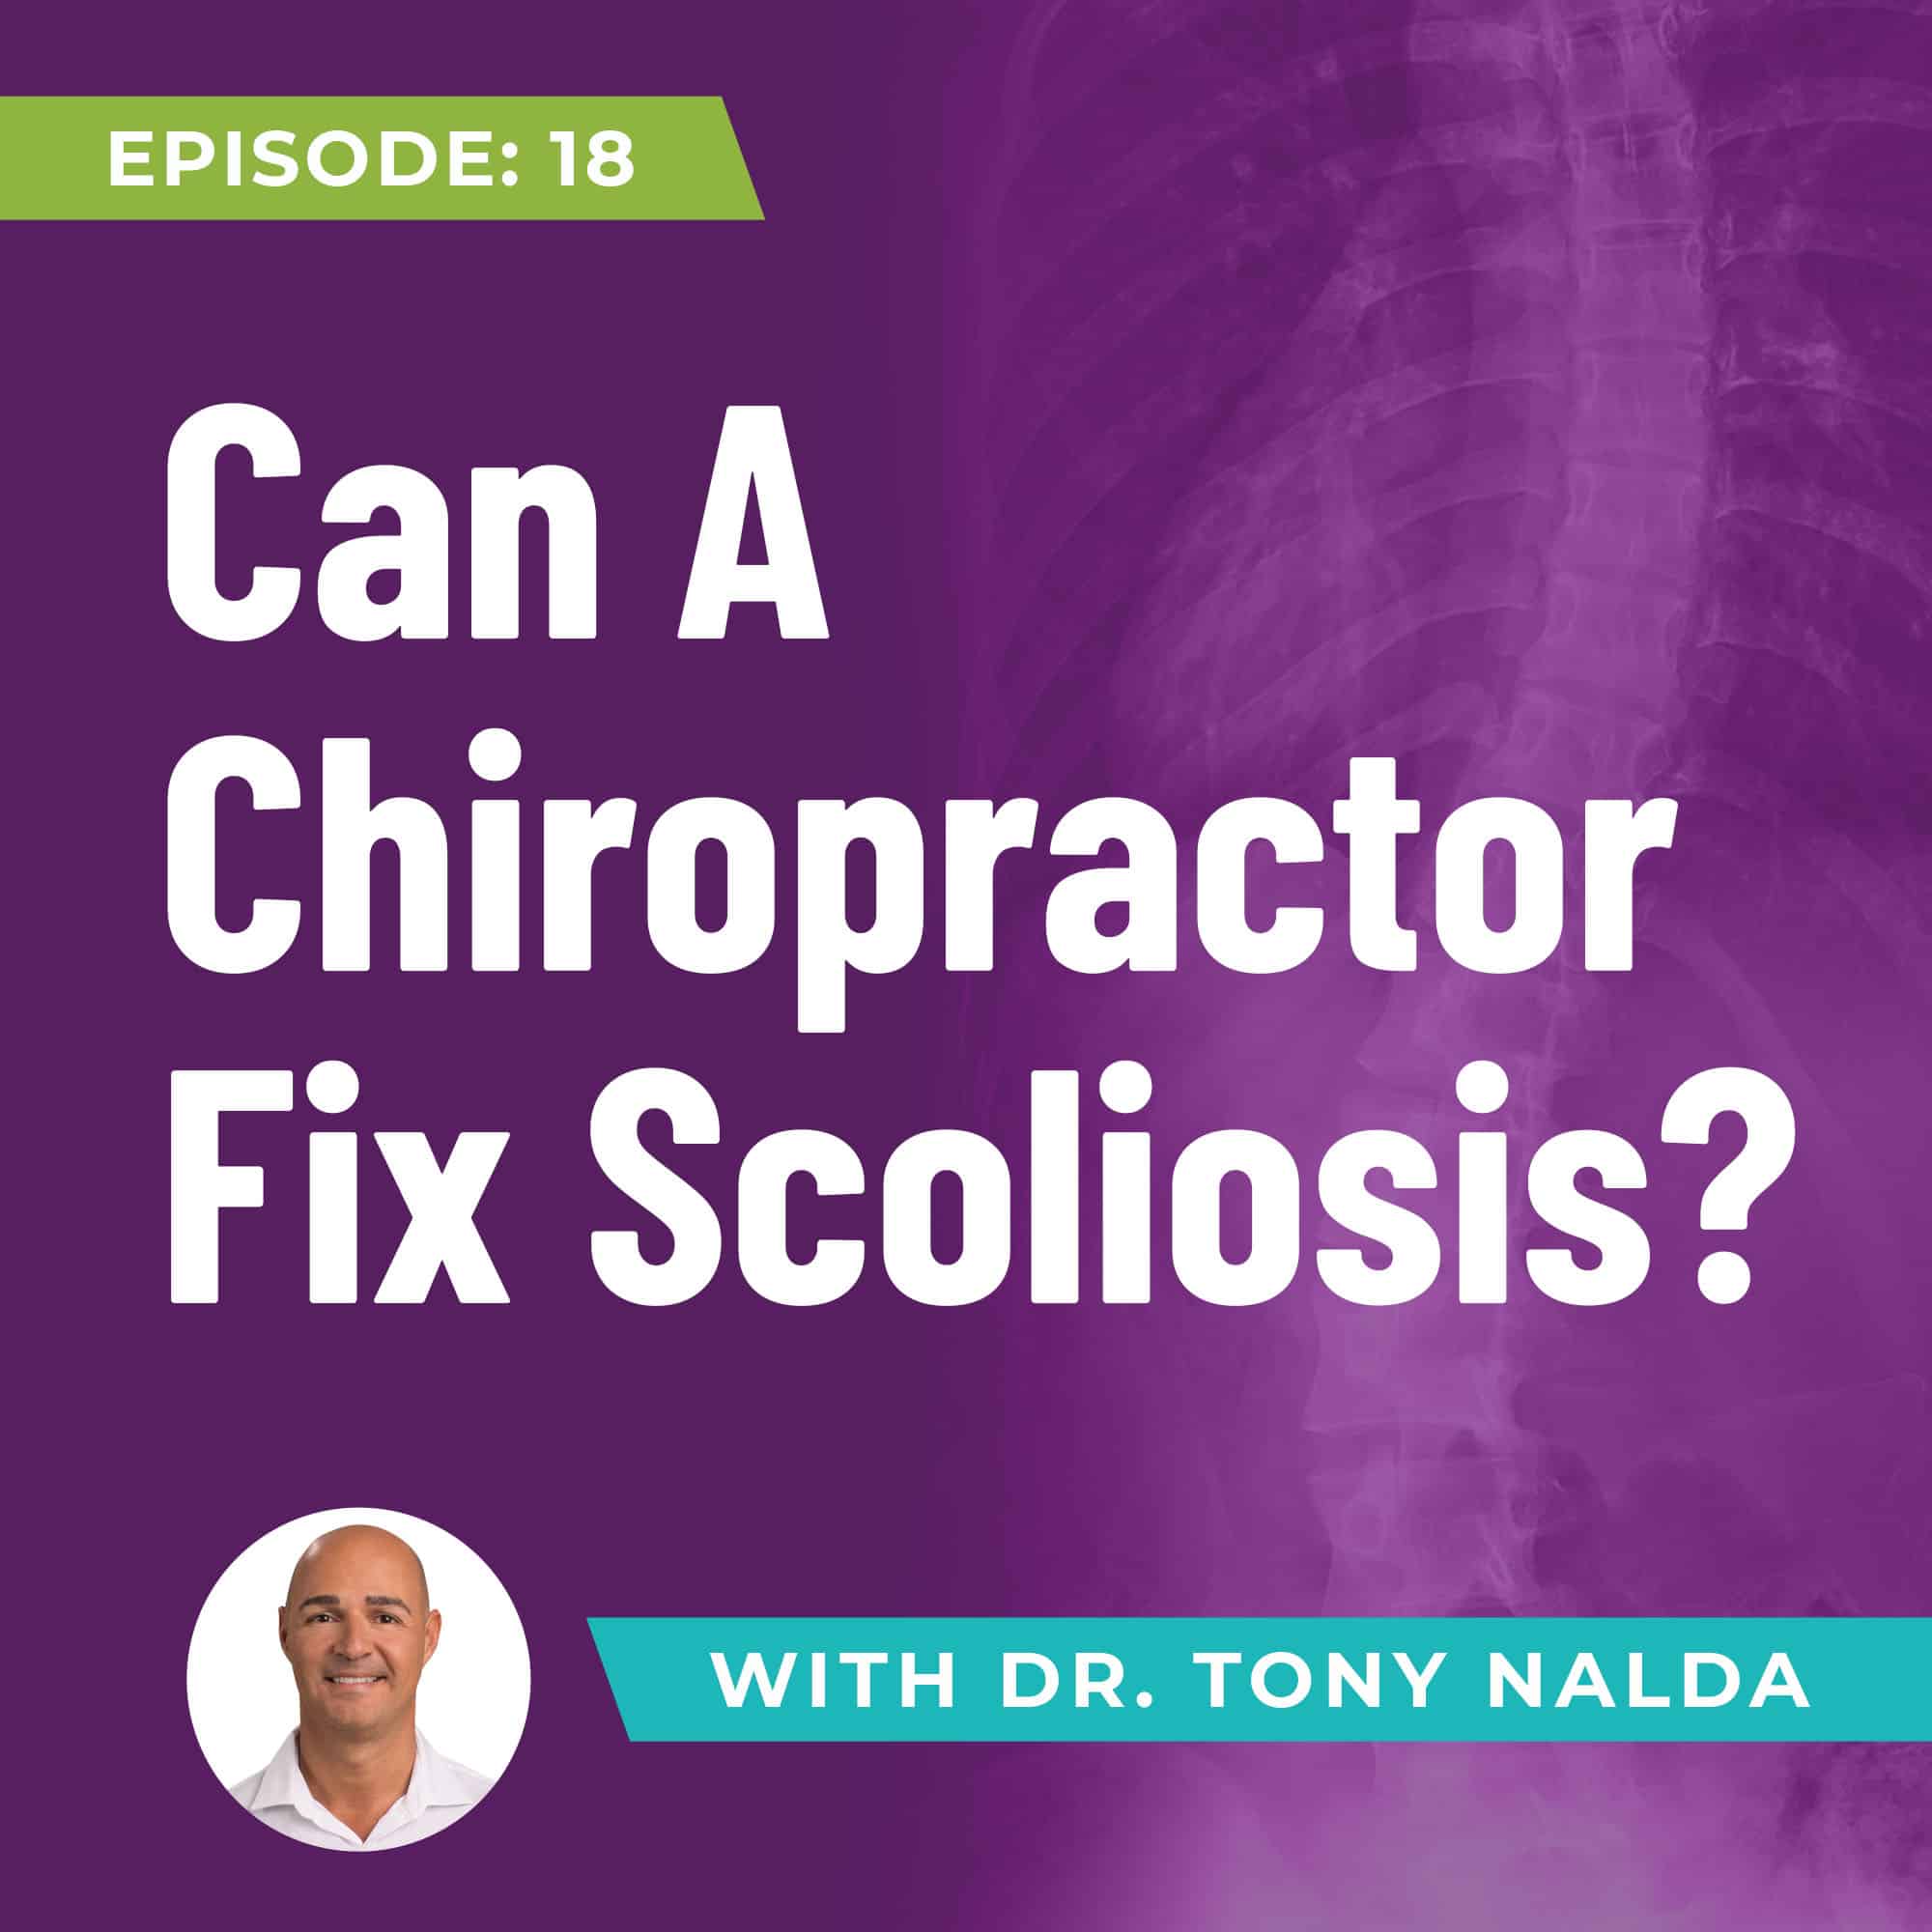 https://drtonynalda.com/wp-content/uploads/2022/10/18-Can-A-Chiropractor-Fix-Scoliosis.jpg